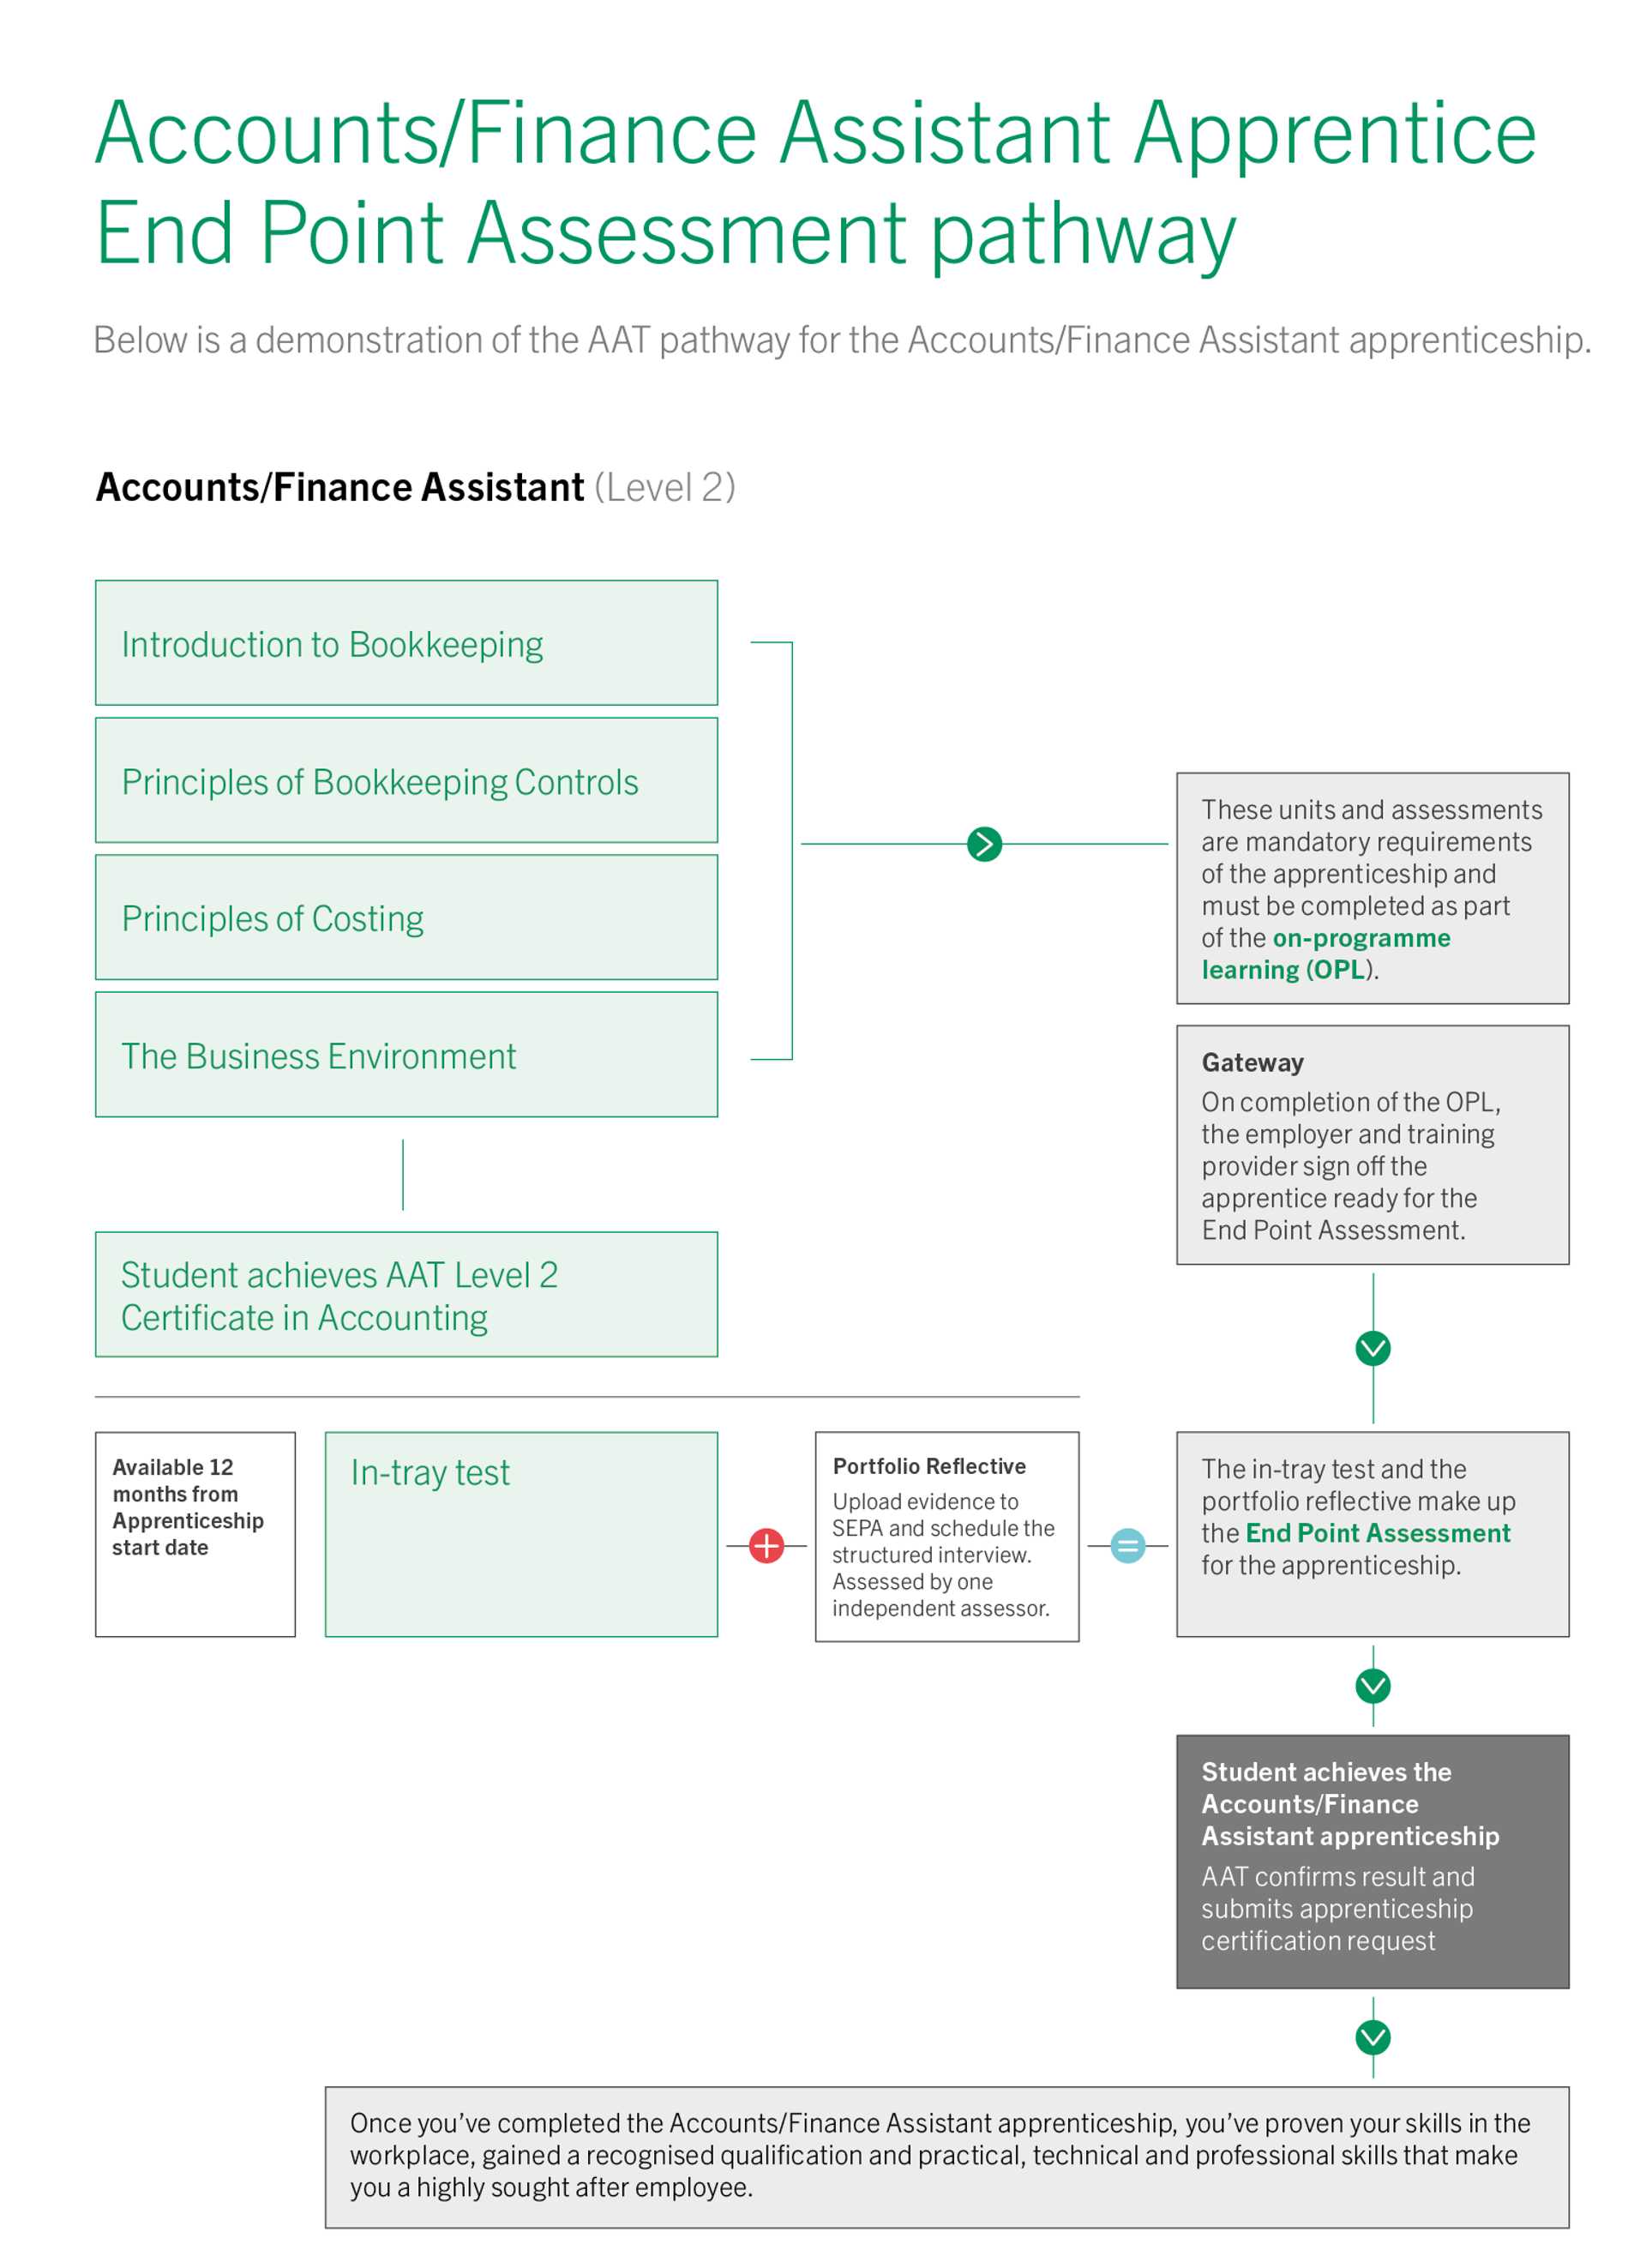 Accounts/Finance Assistant apprenticeship EPA pathway